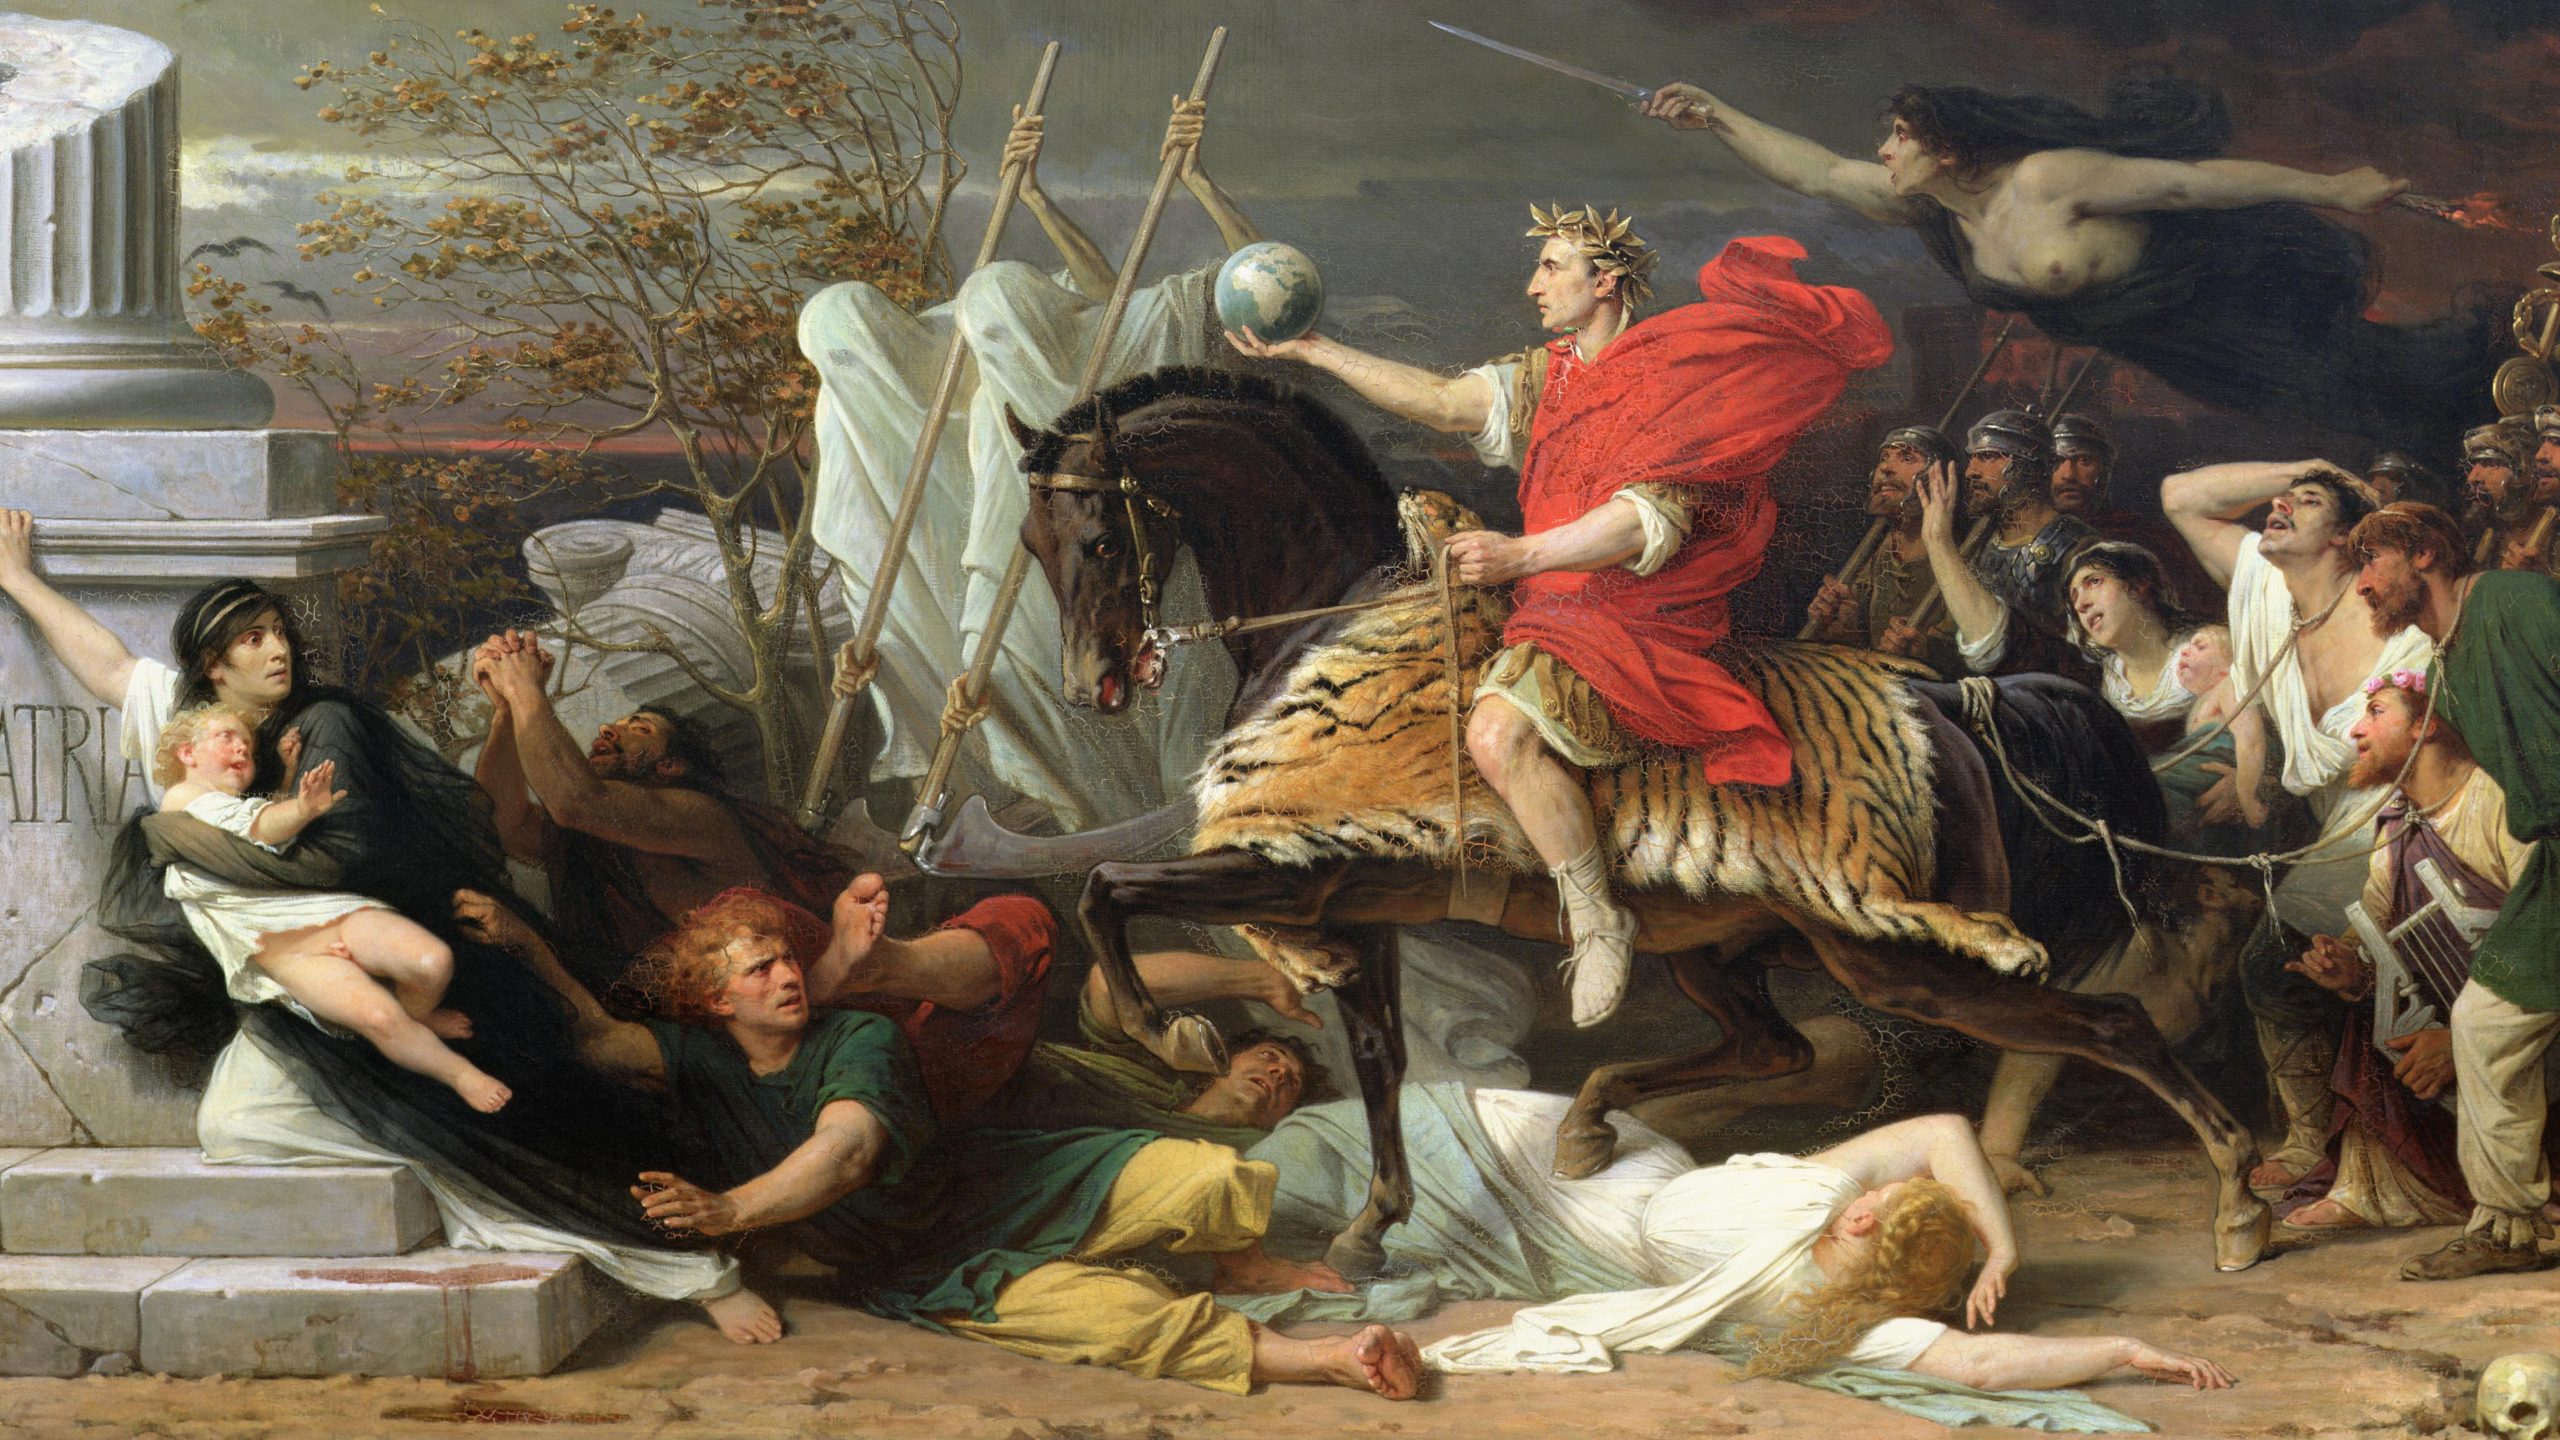 battle of pharsalus painting